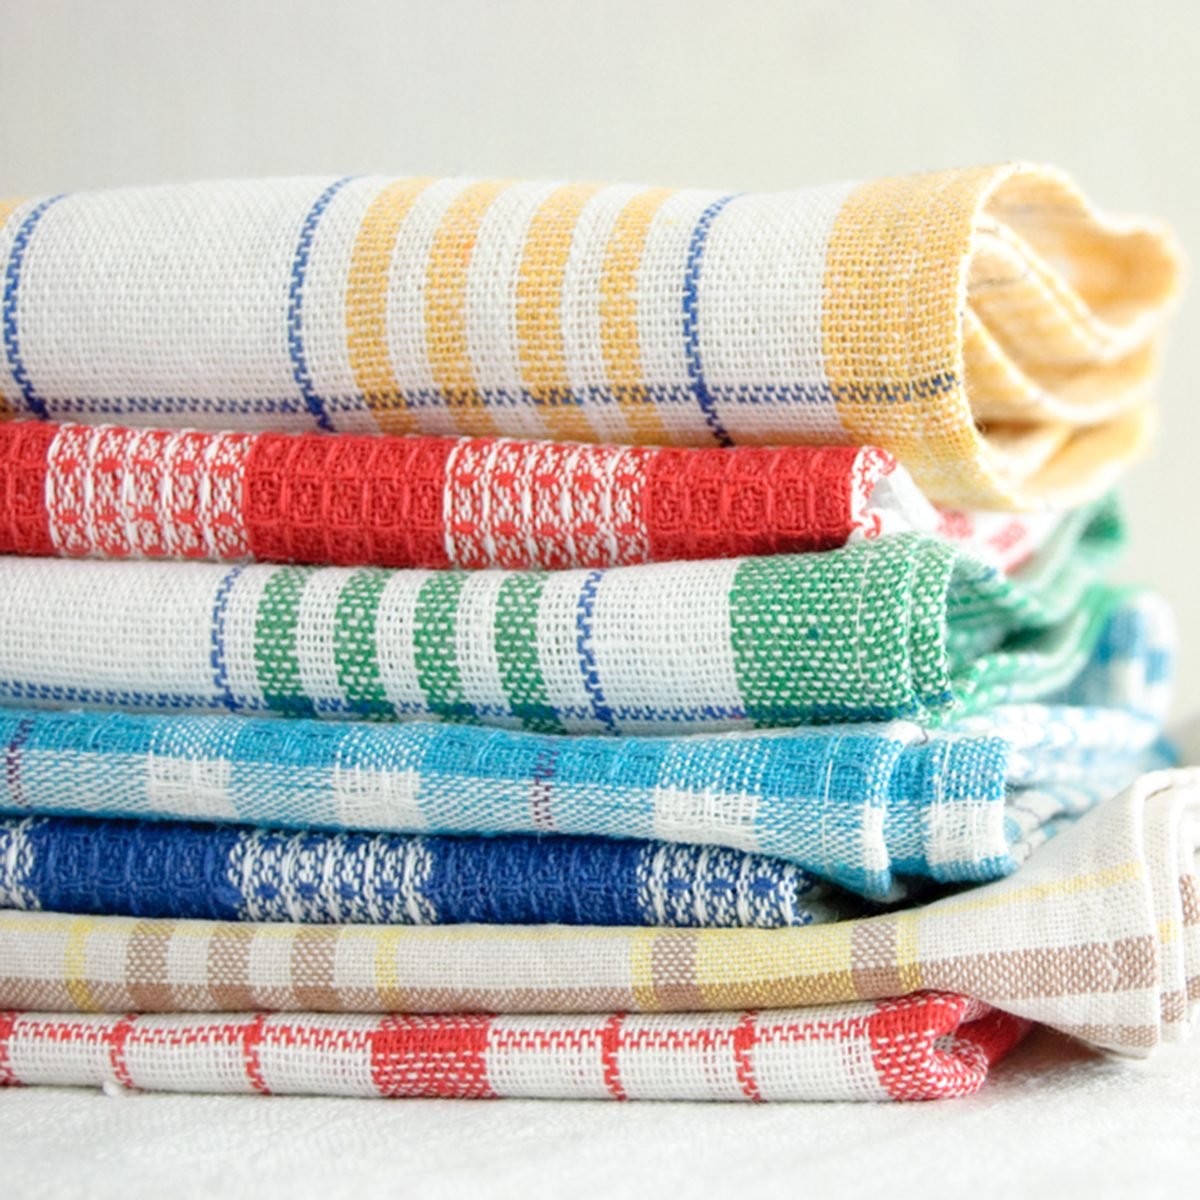 https://www.tasteofhome.com/wp-content/uploads/2018/09/stack-of-towels.jpg